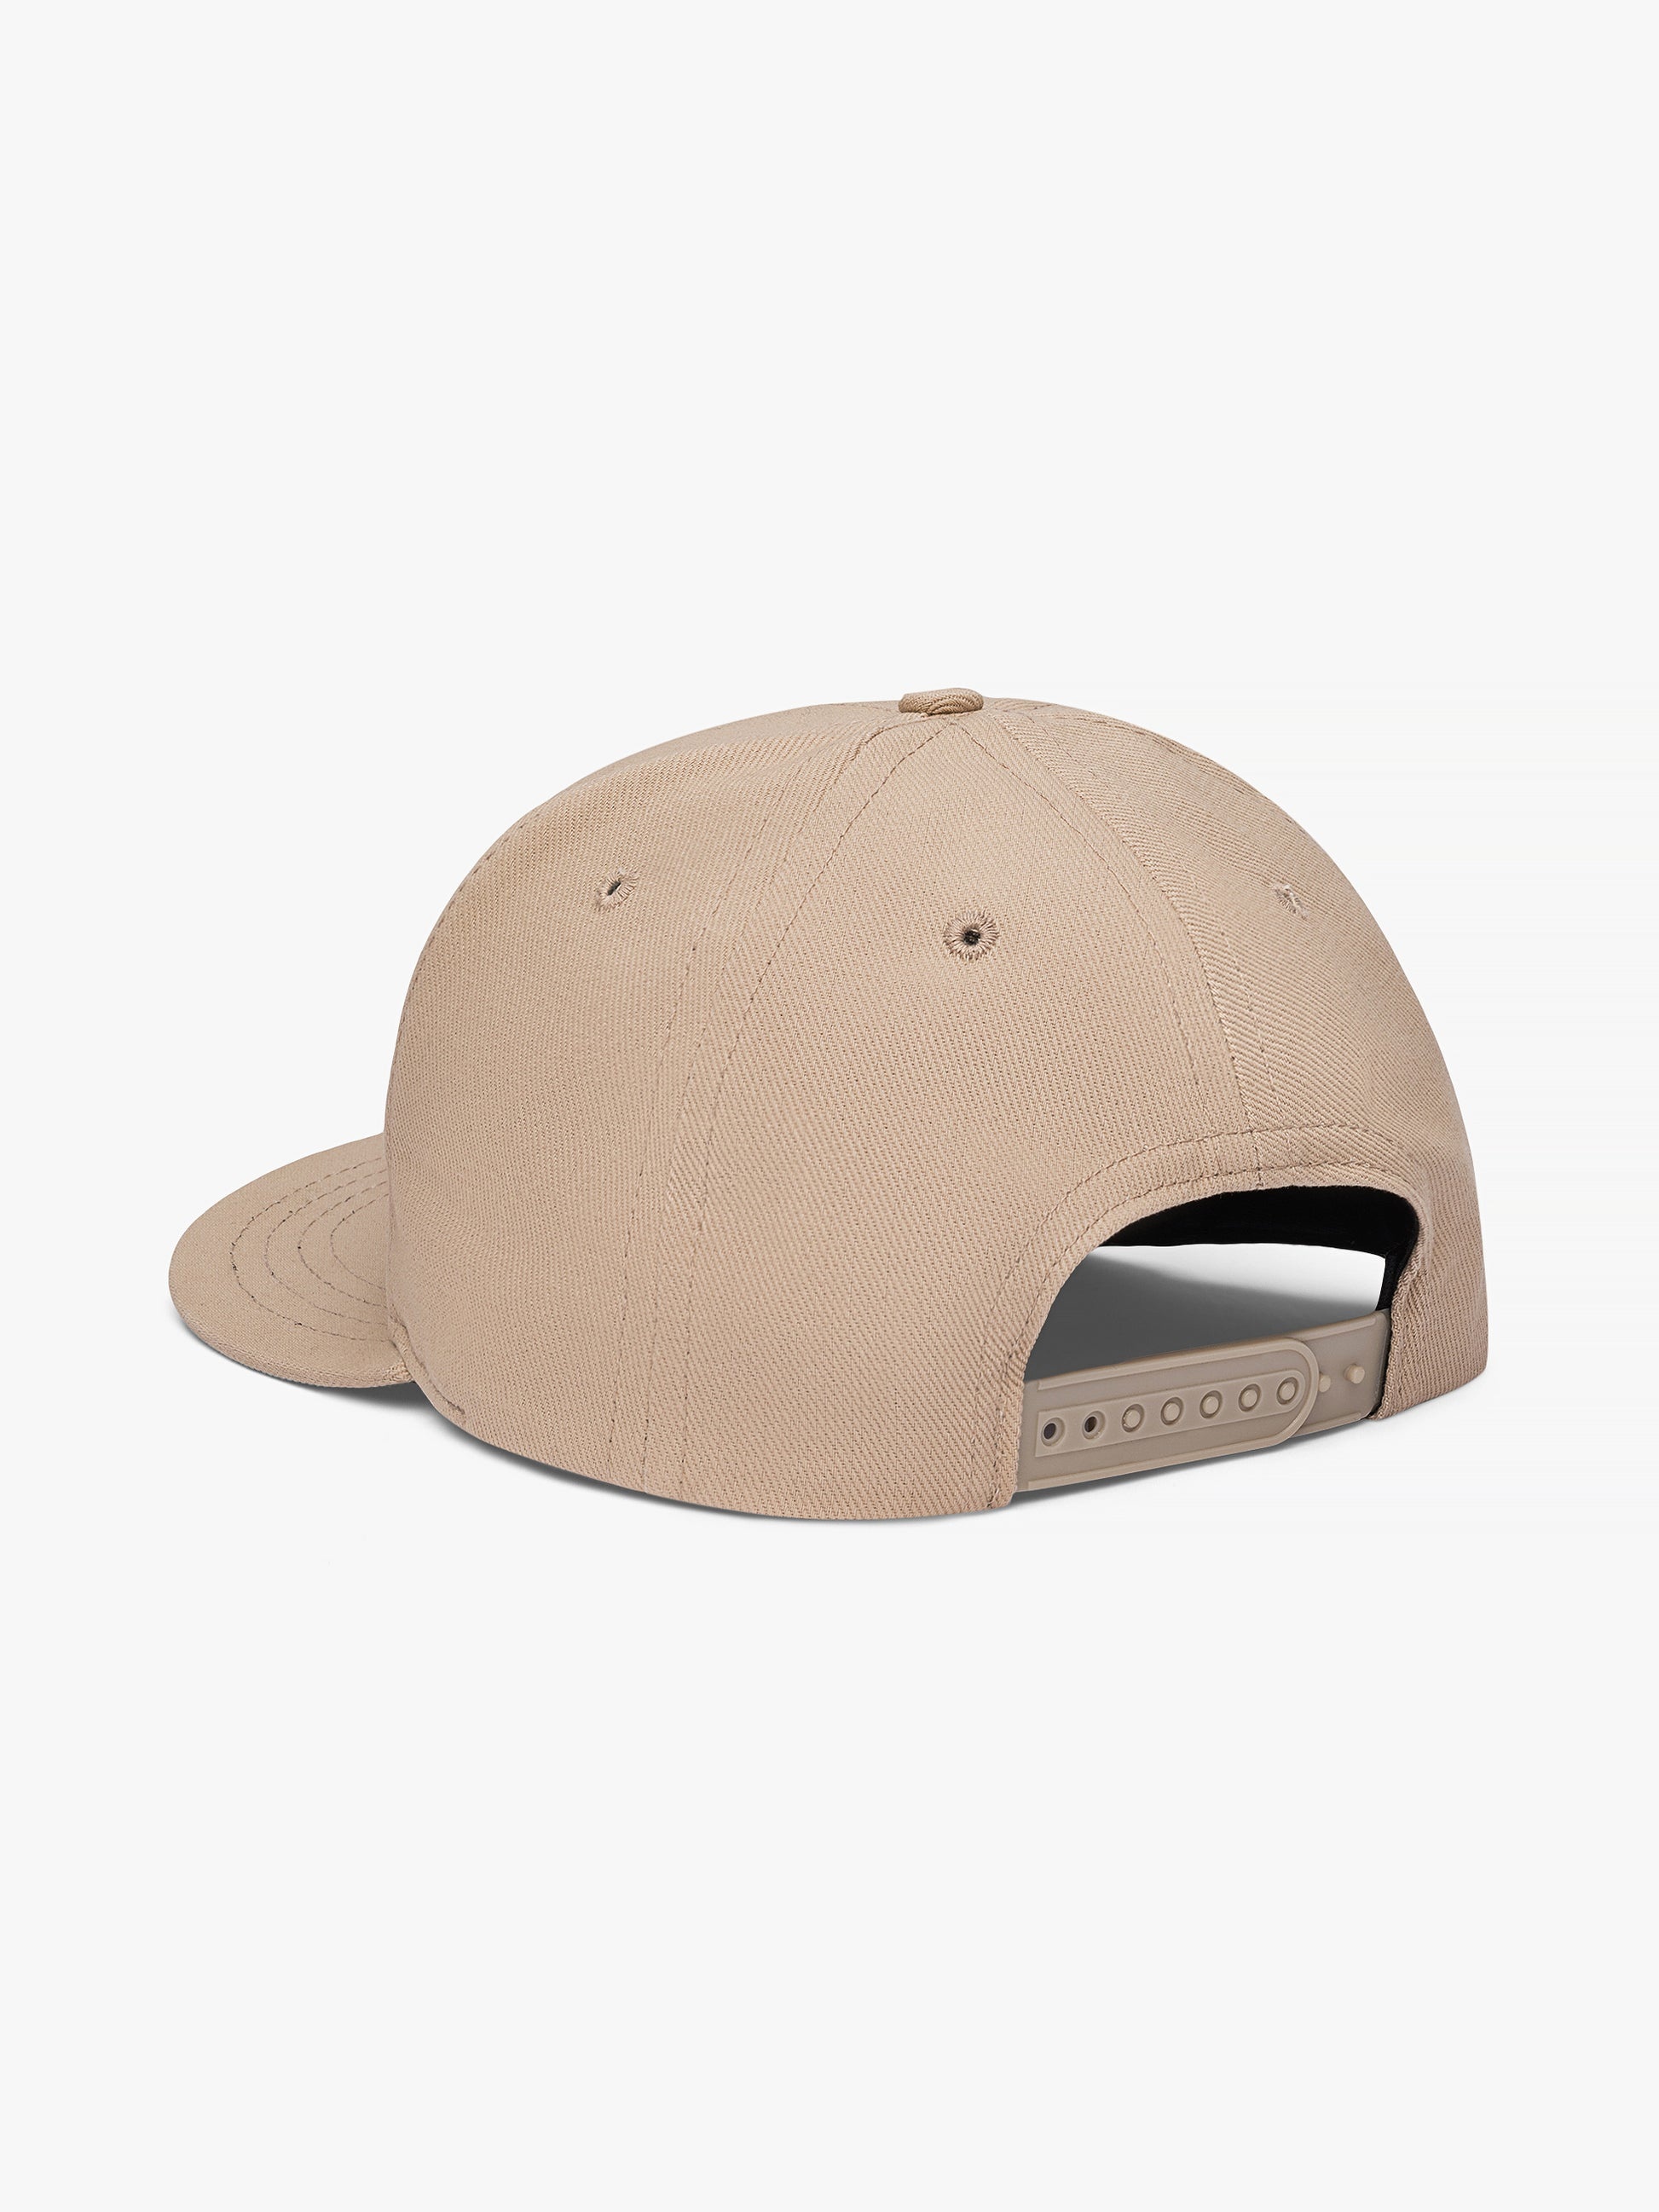 CIGARO HAT - 2